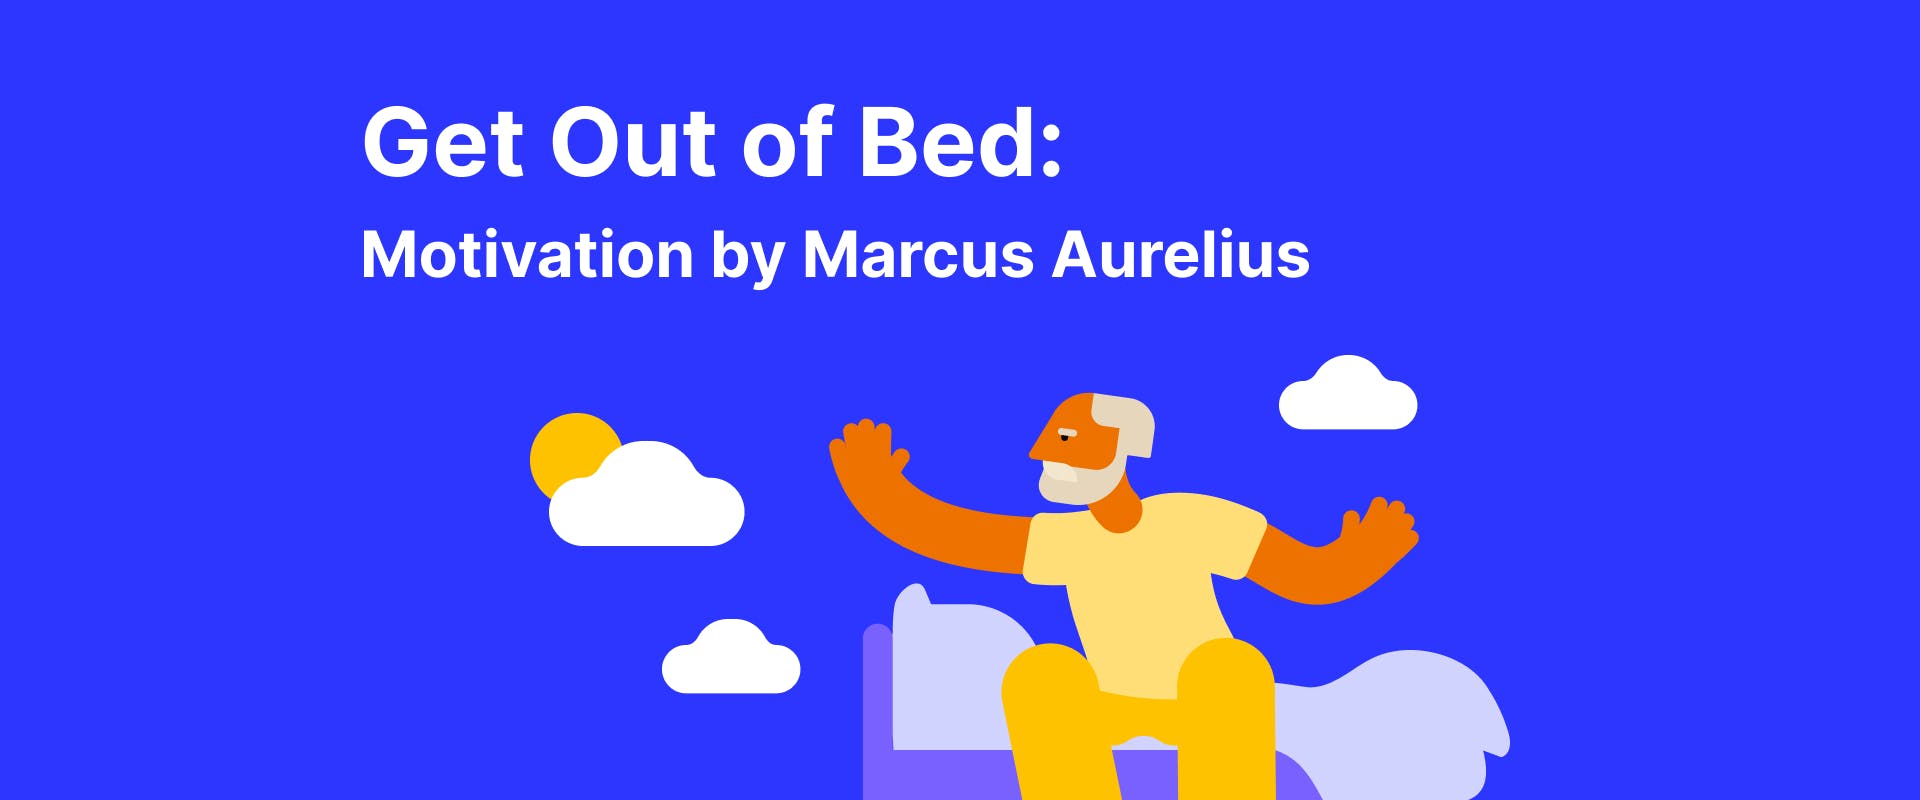 Marcus Aurelius get out of bed